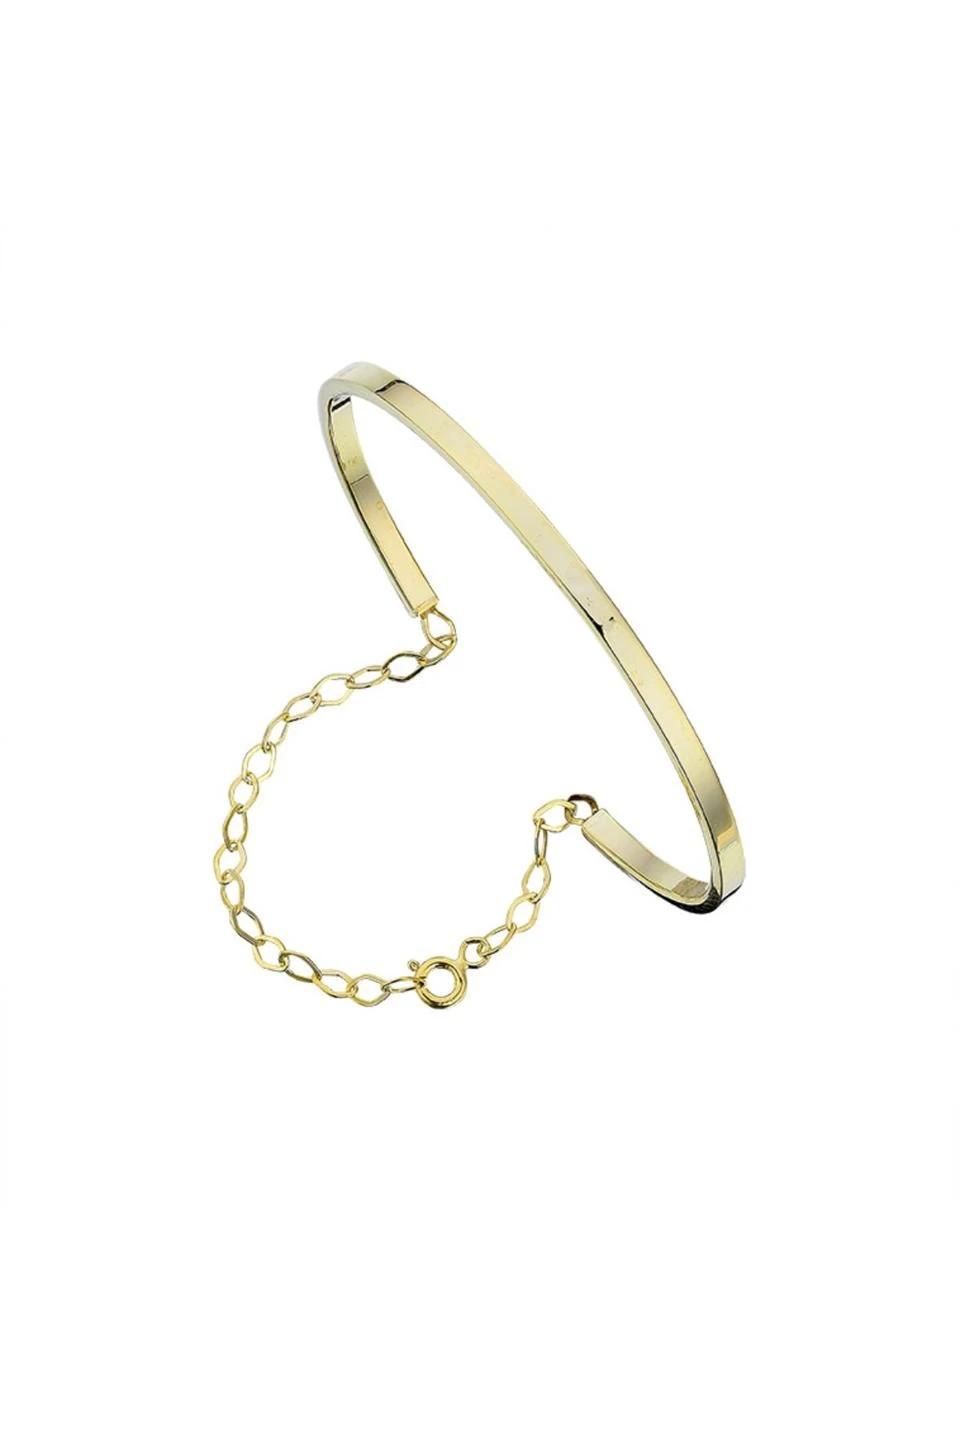 Motto personalizable bracelet - Gold